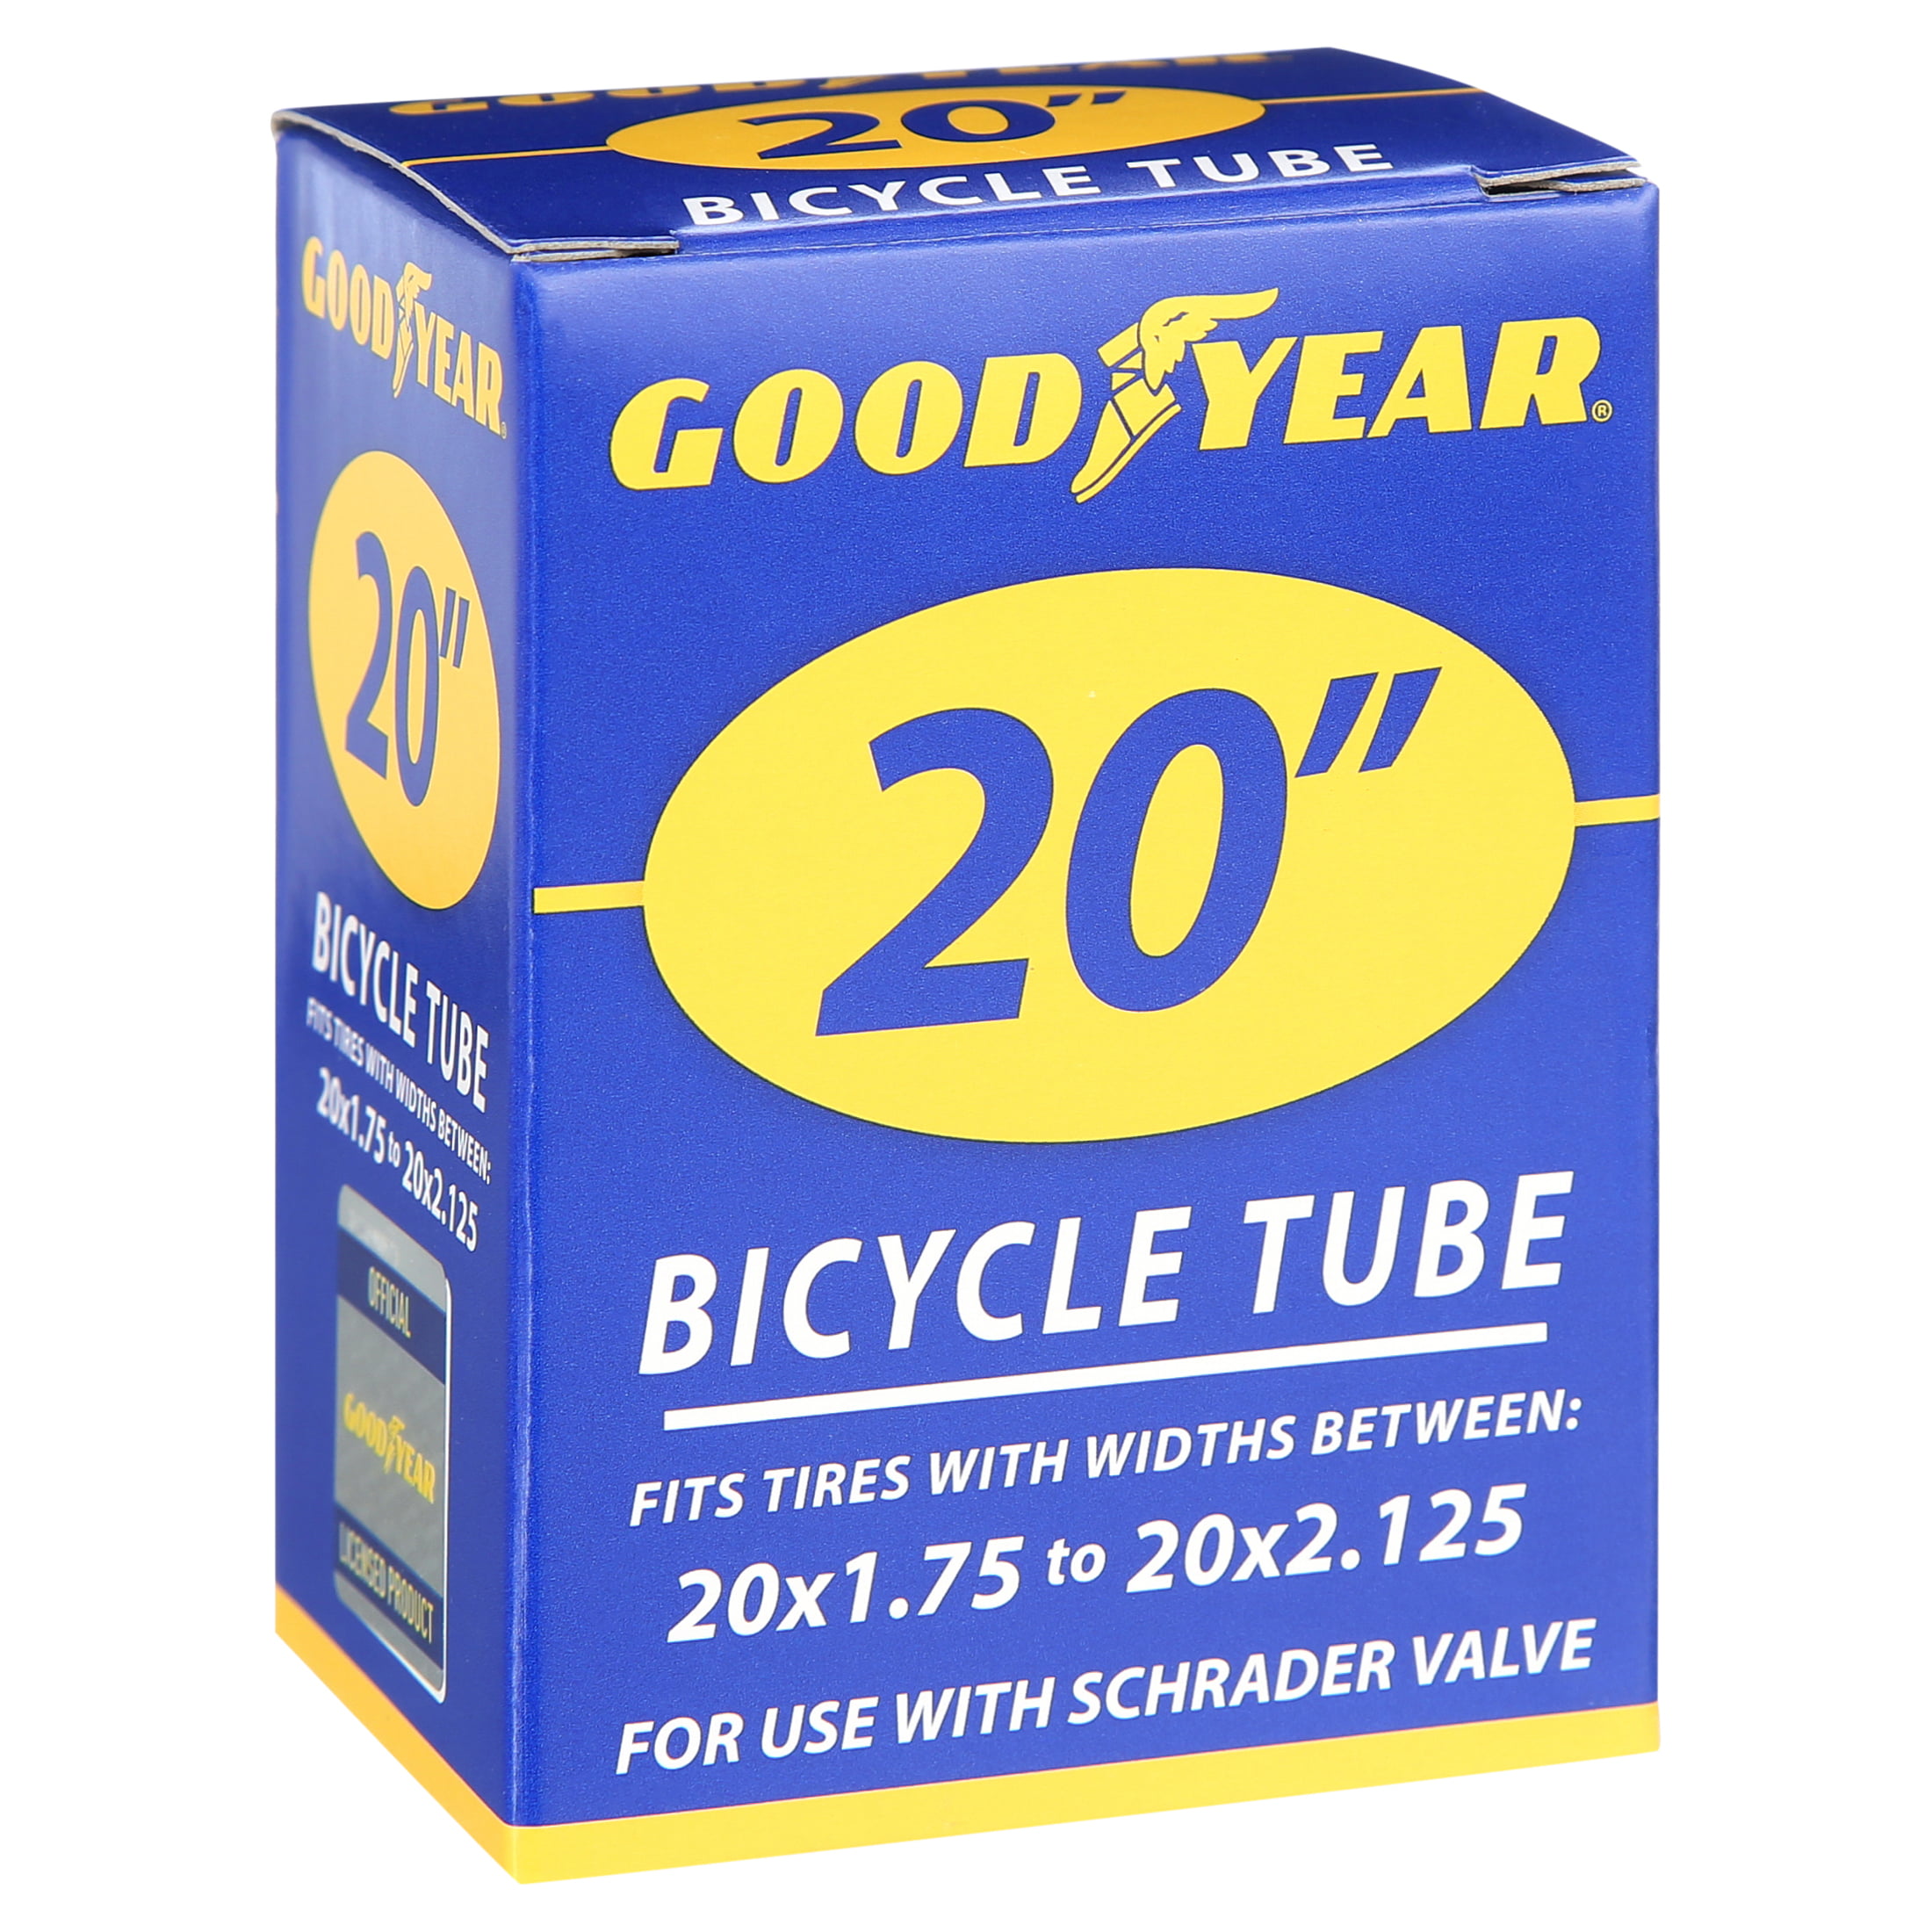 Nouveau Vélo GOODYEAR Tubes 20" Schrader Valve 20x1.75 à 2.125" pneu roue